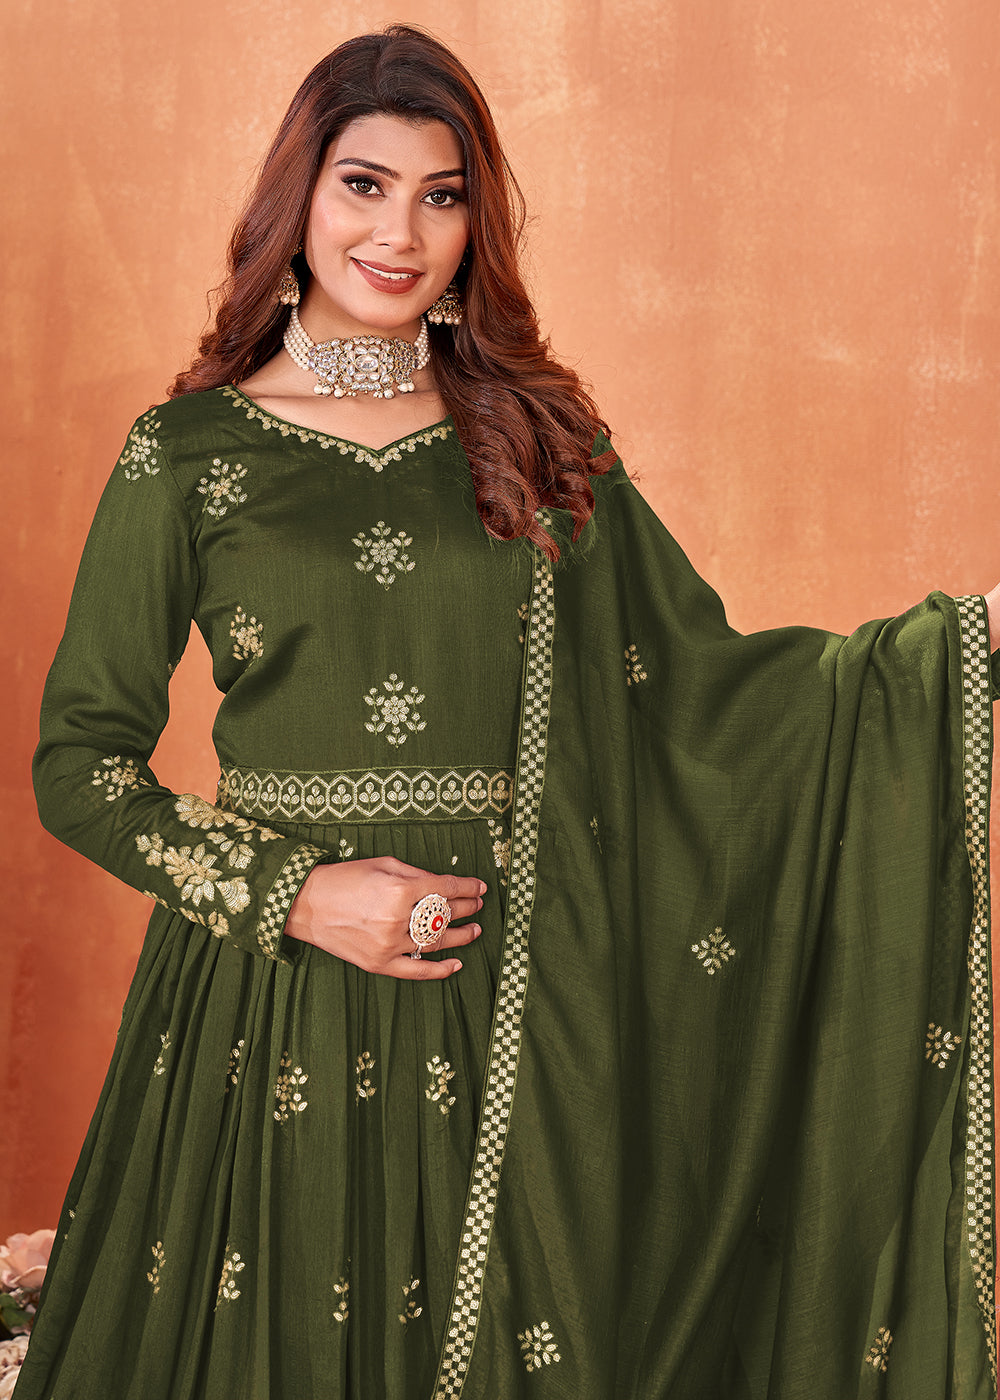 Buy Now Mehndi Green Festive Embroidered Art Silk Anarkali Suit Online in USA, UK, Australia, New Zealand, Canada & Worldwide at Empress Clothing.